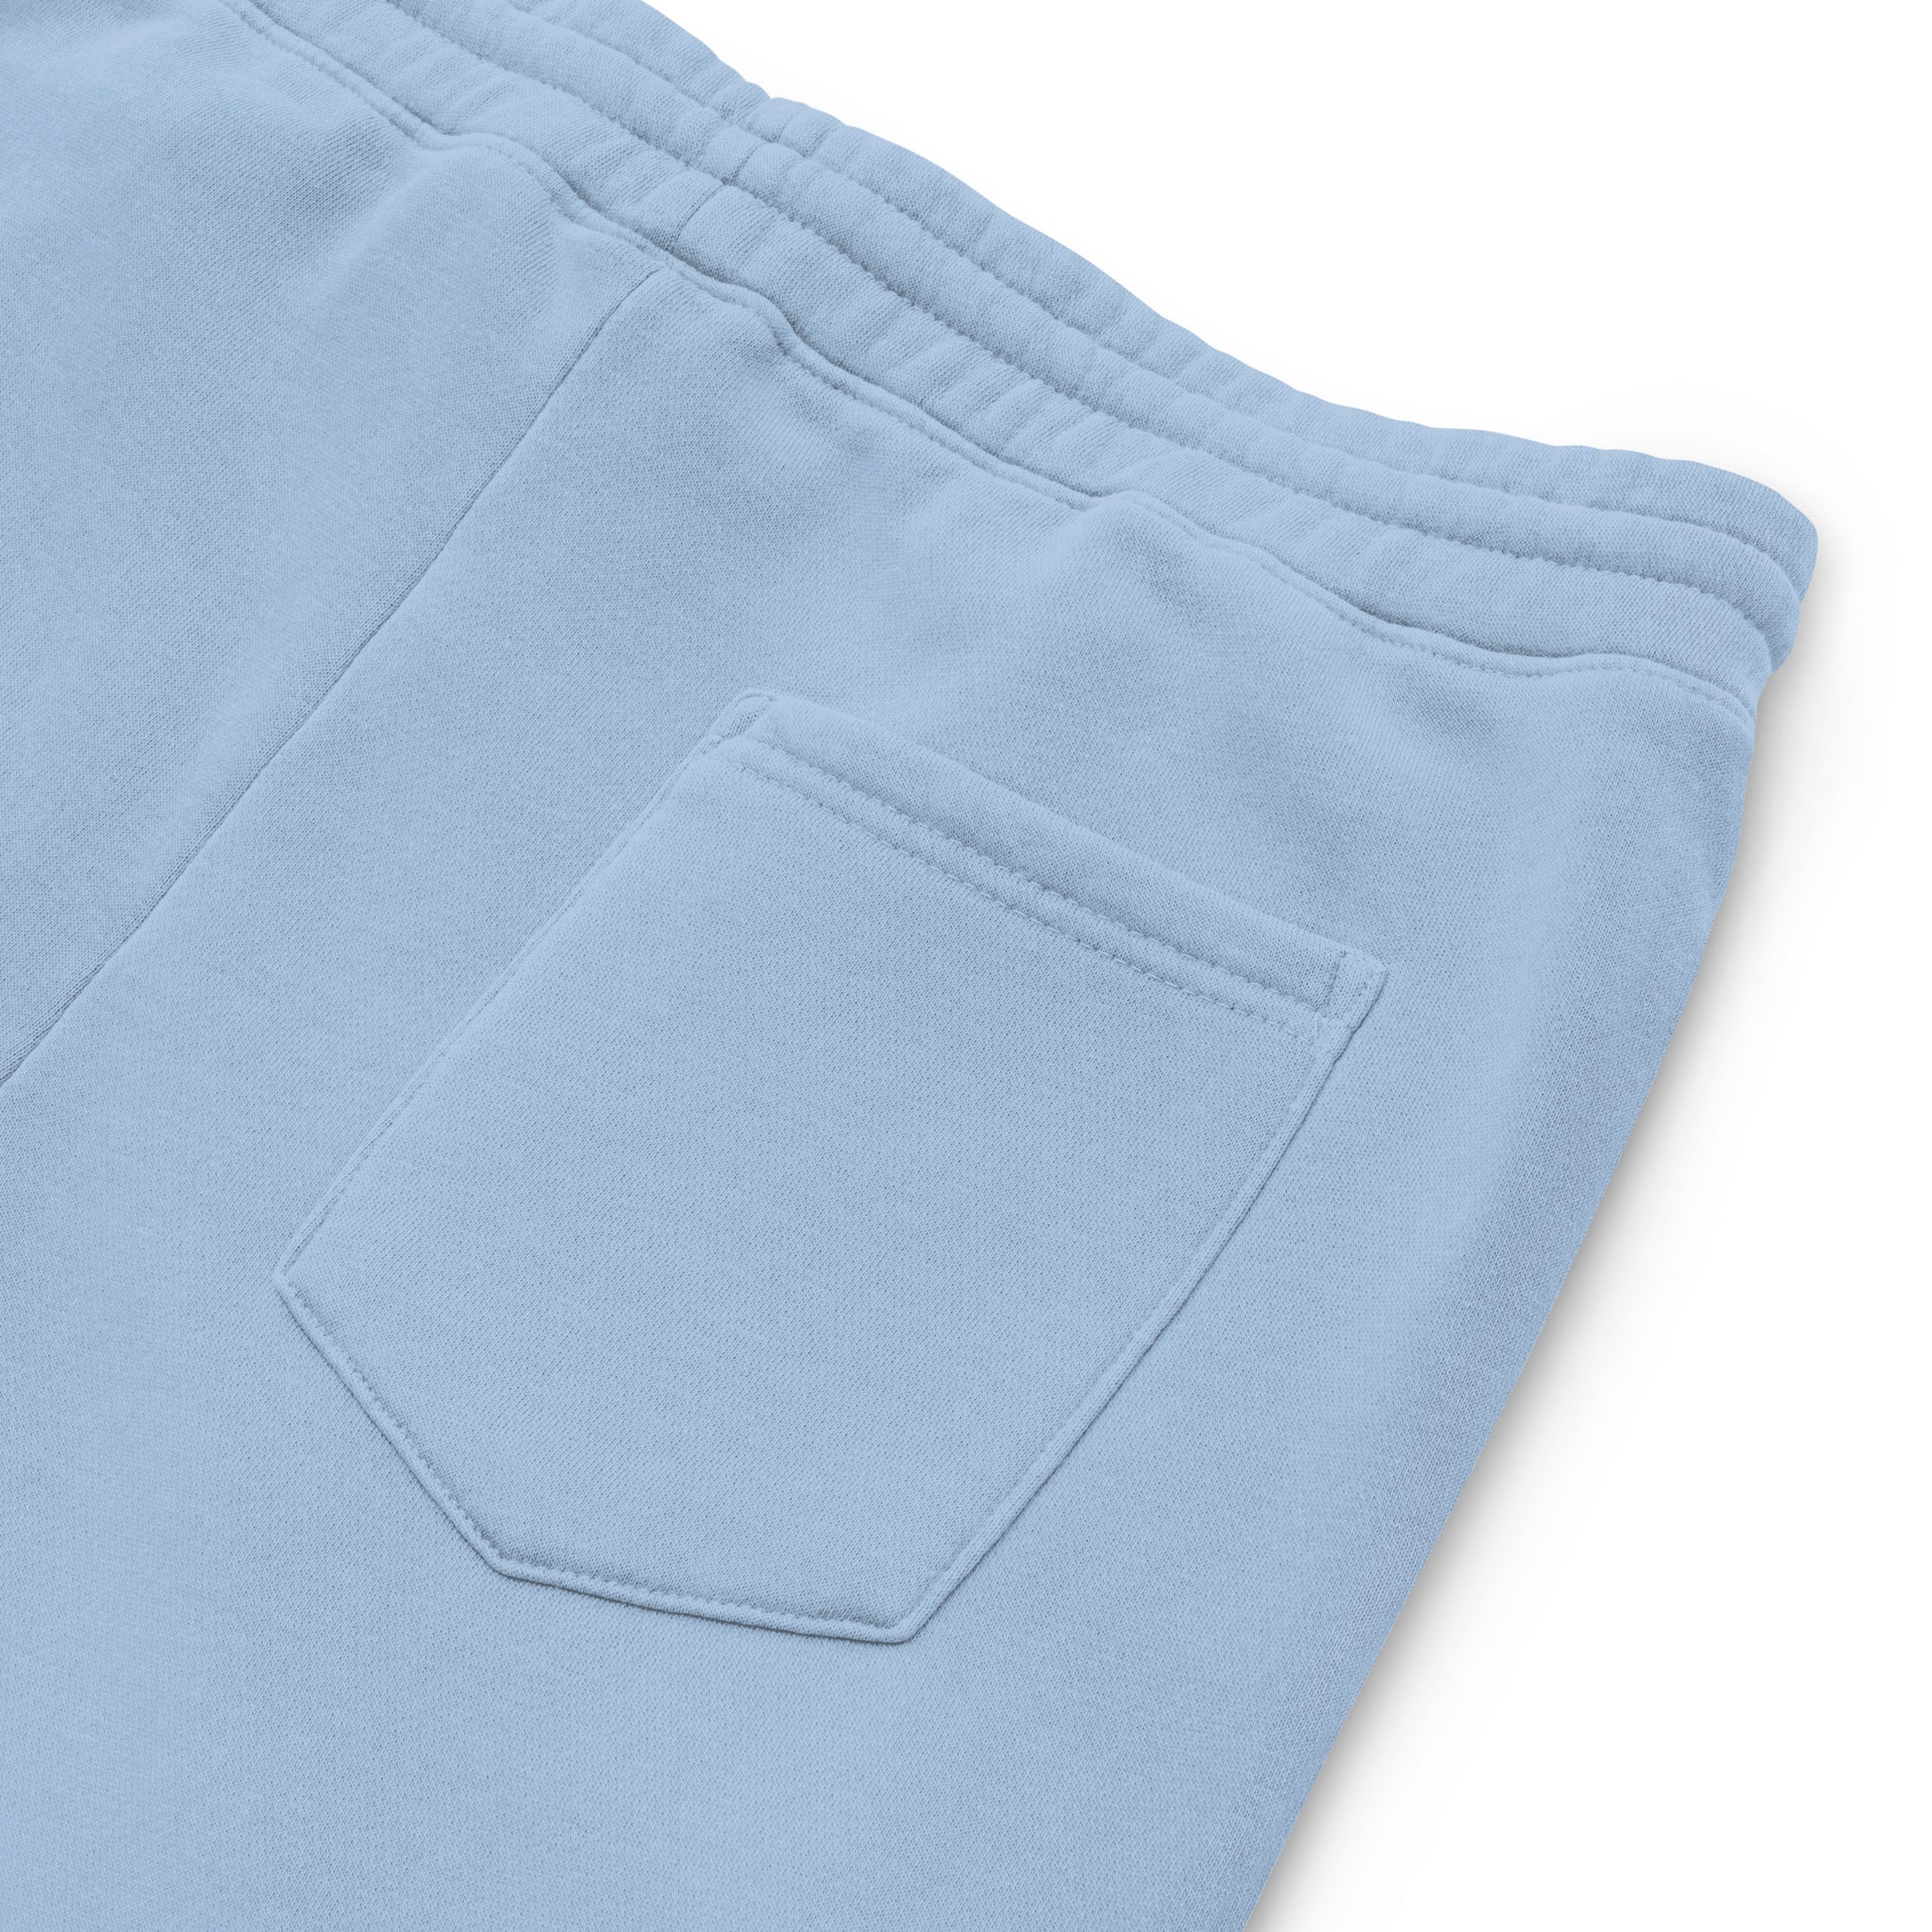 Relaxed Fit Premium Cotton Sweatpants Jain Yoga